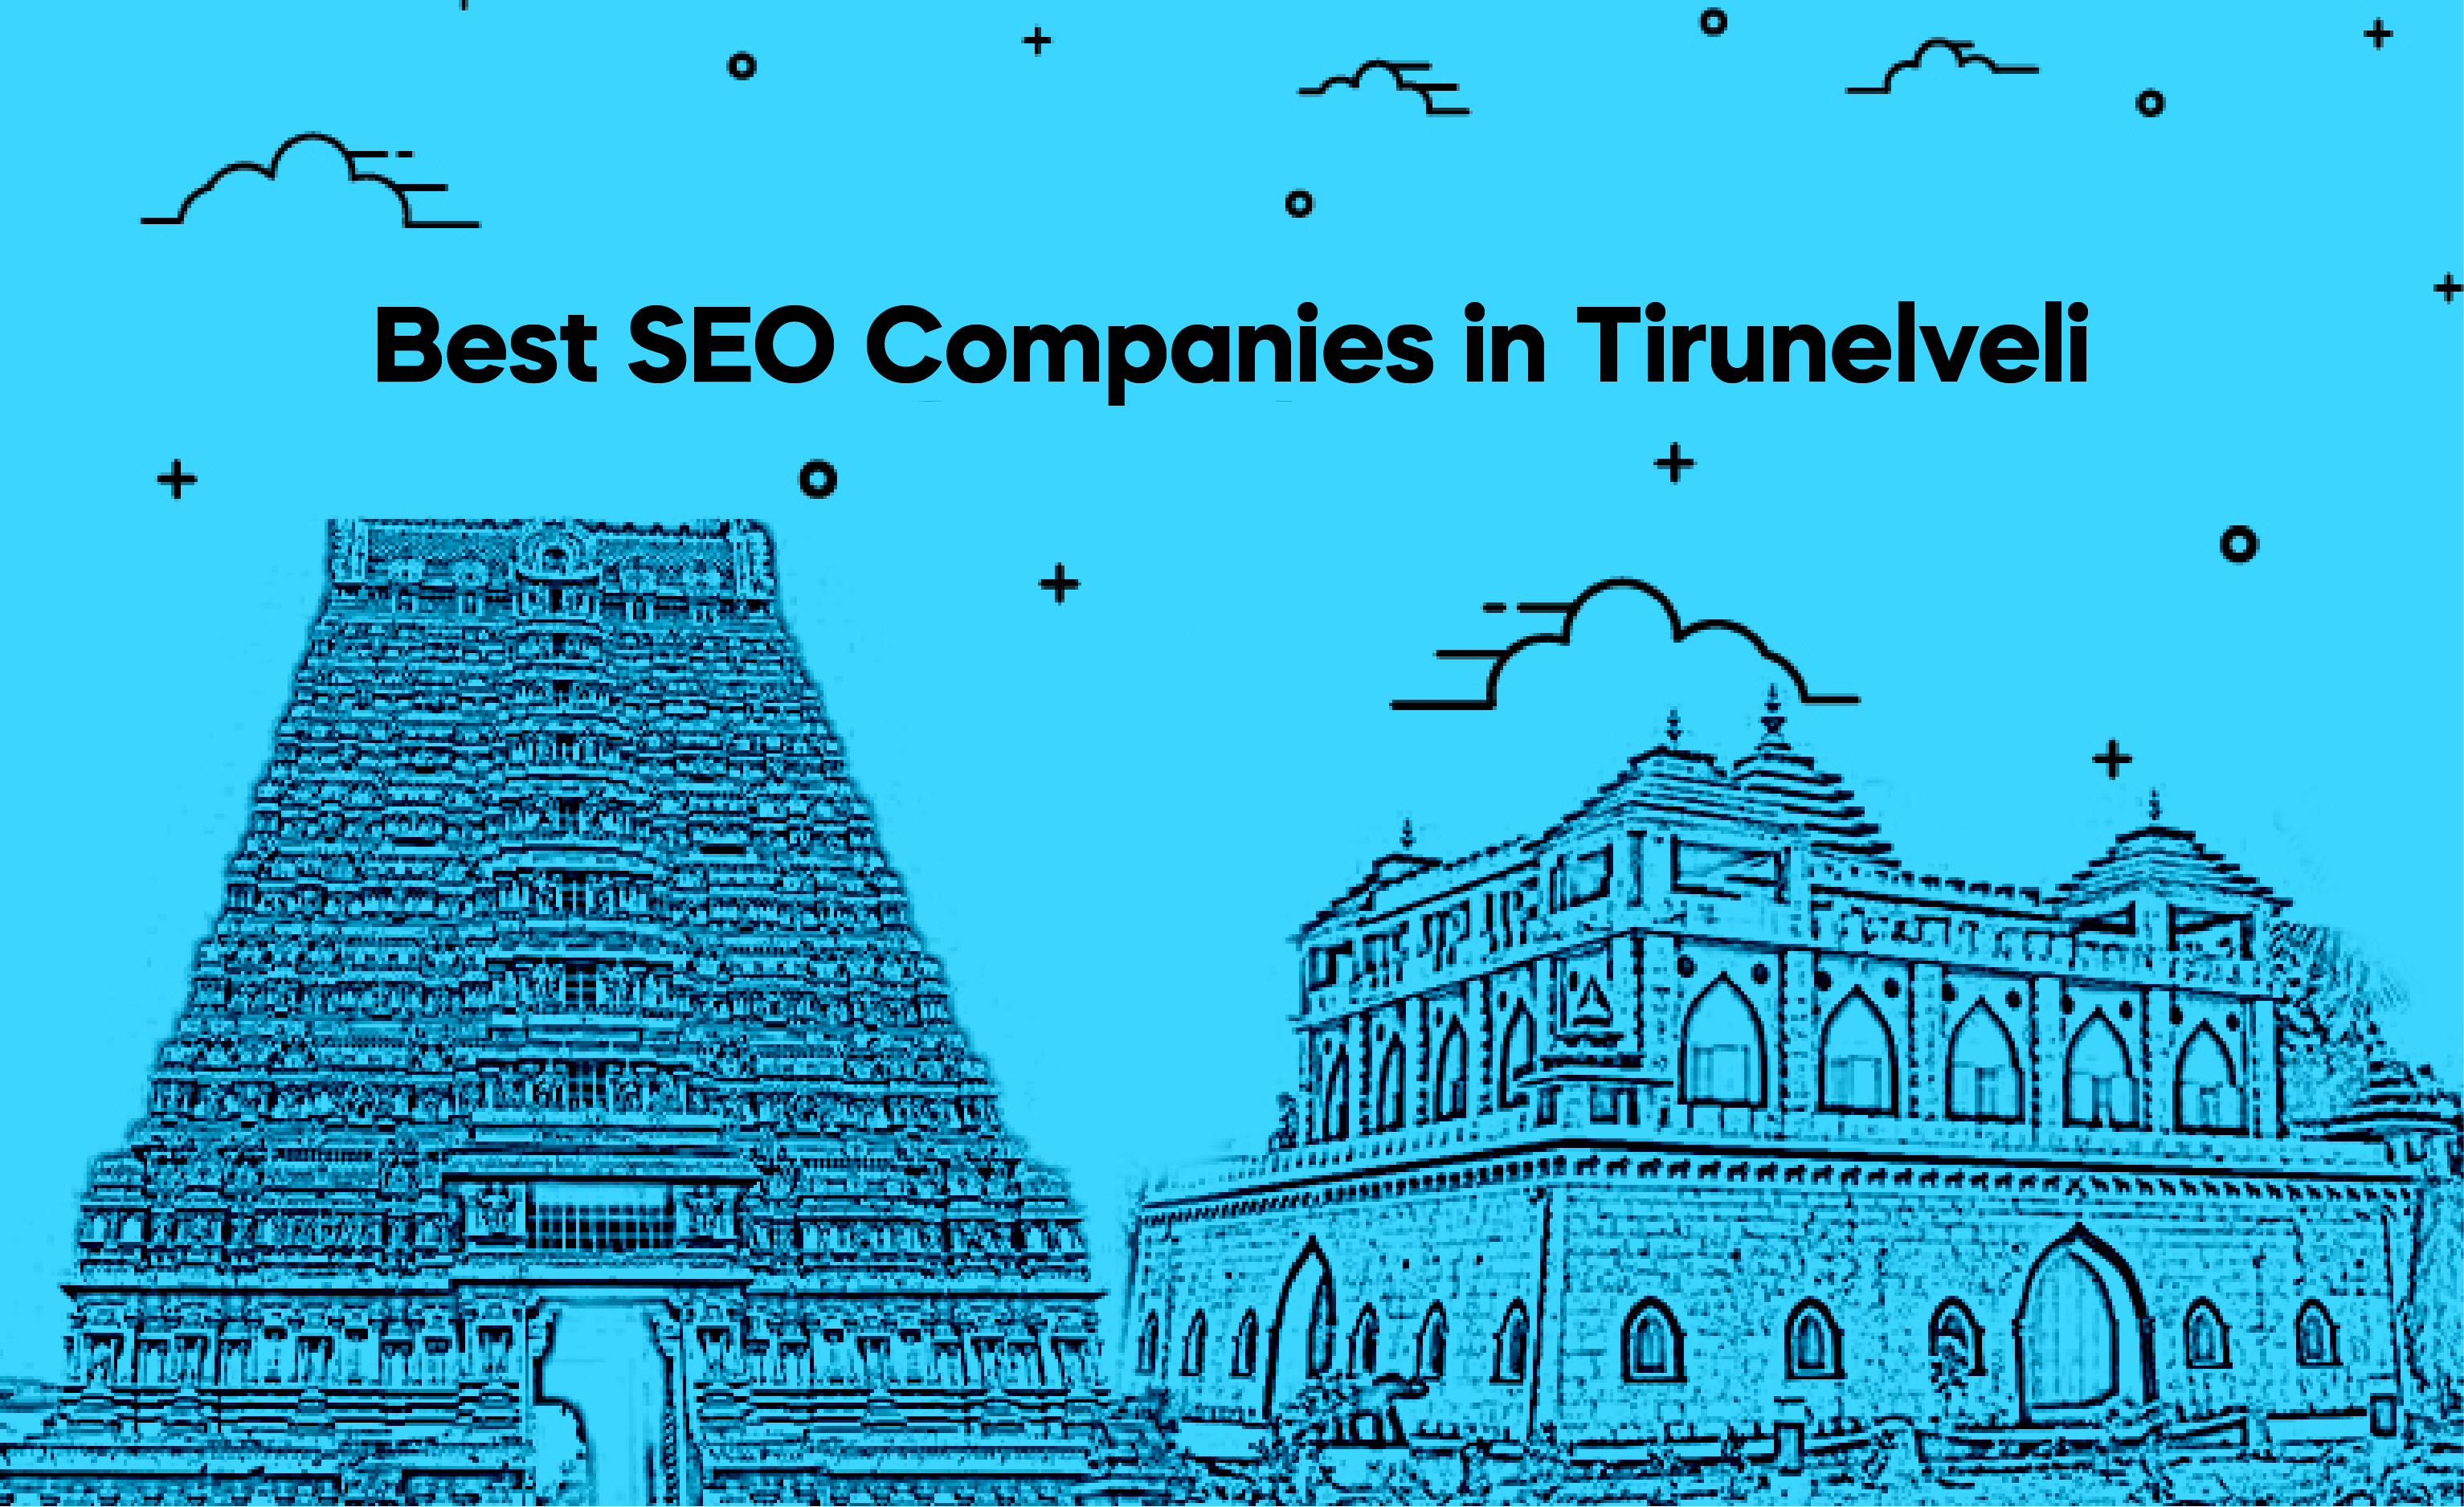 Top 5 SEO Companies in Tirunelveli